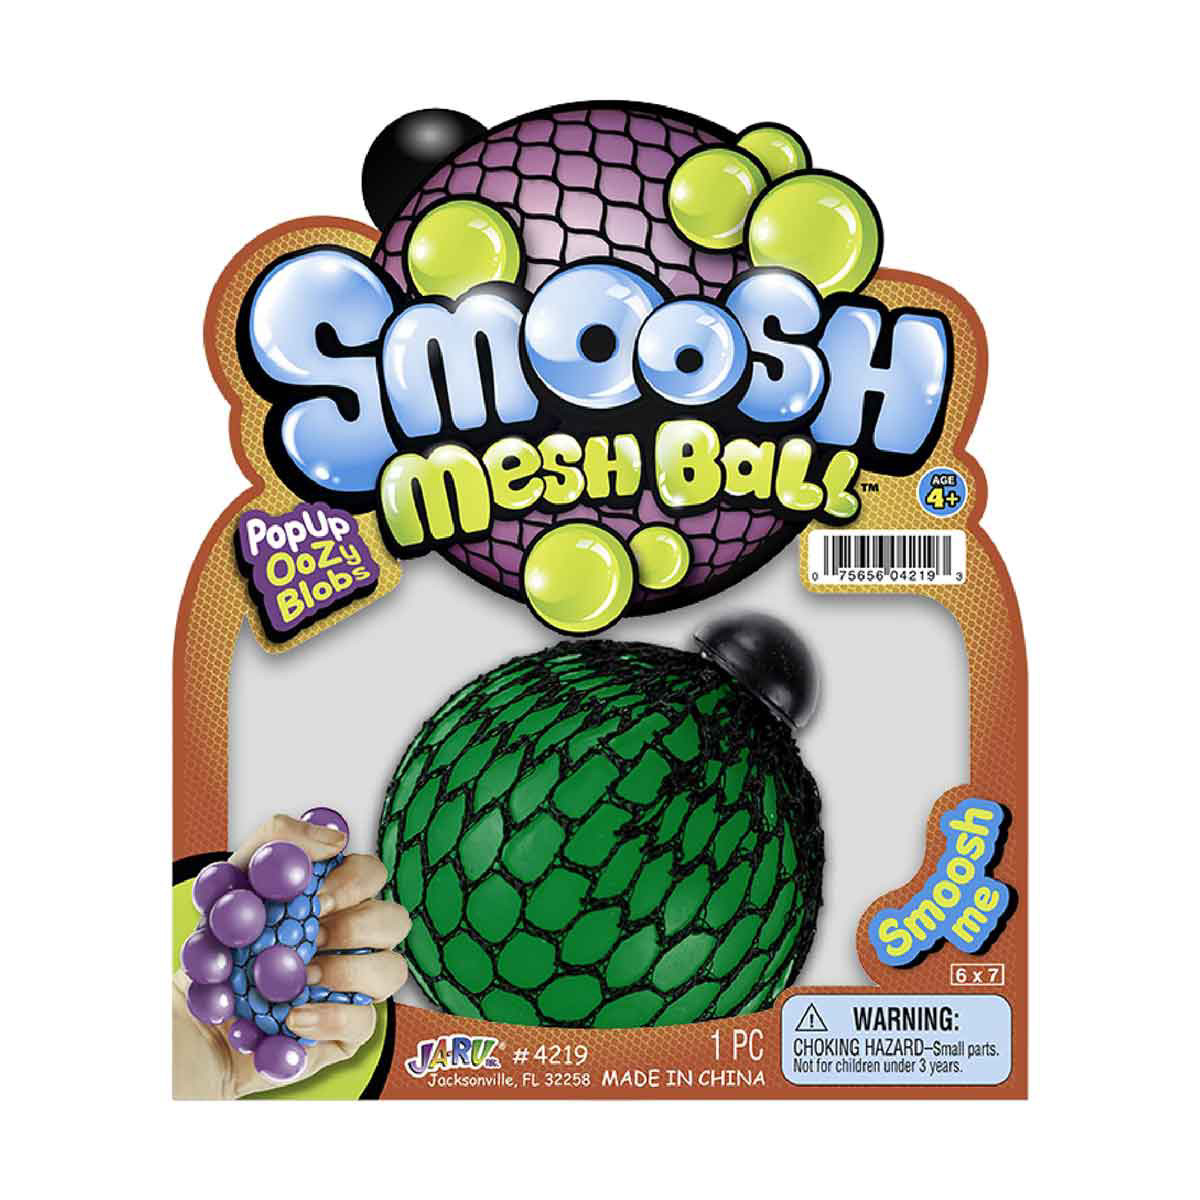 Dual Color Smoosh Mesh Ball Toy